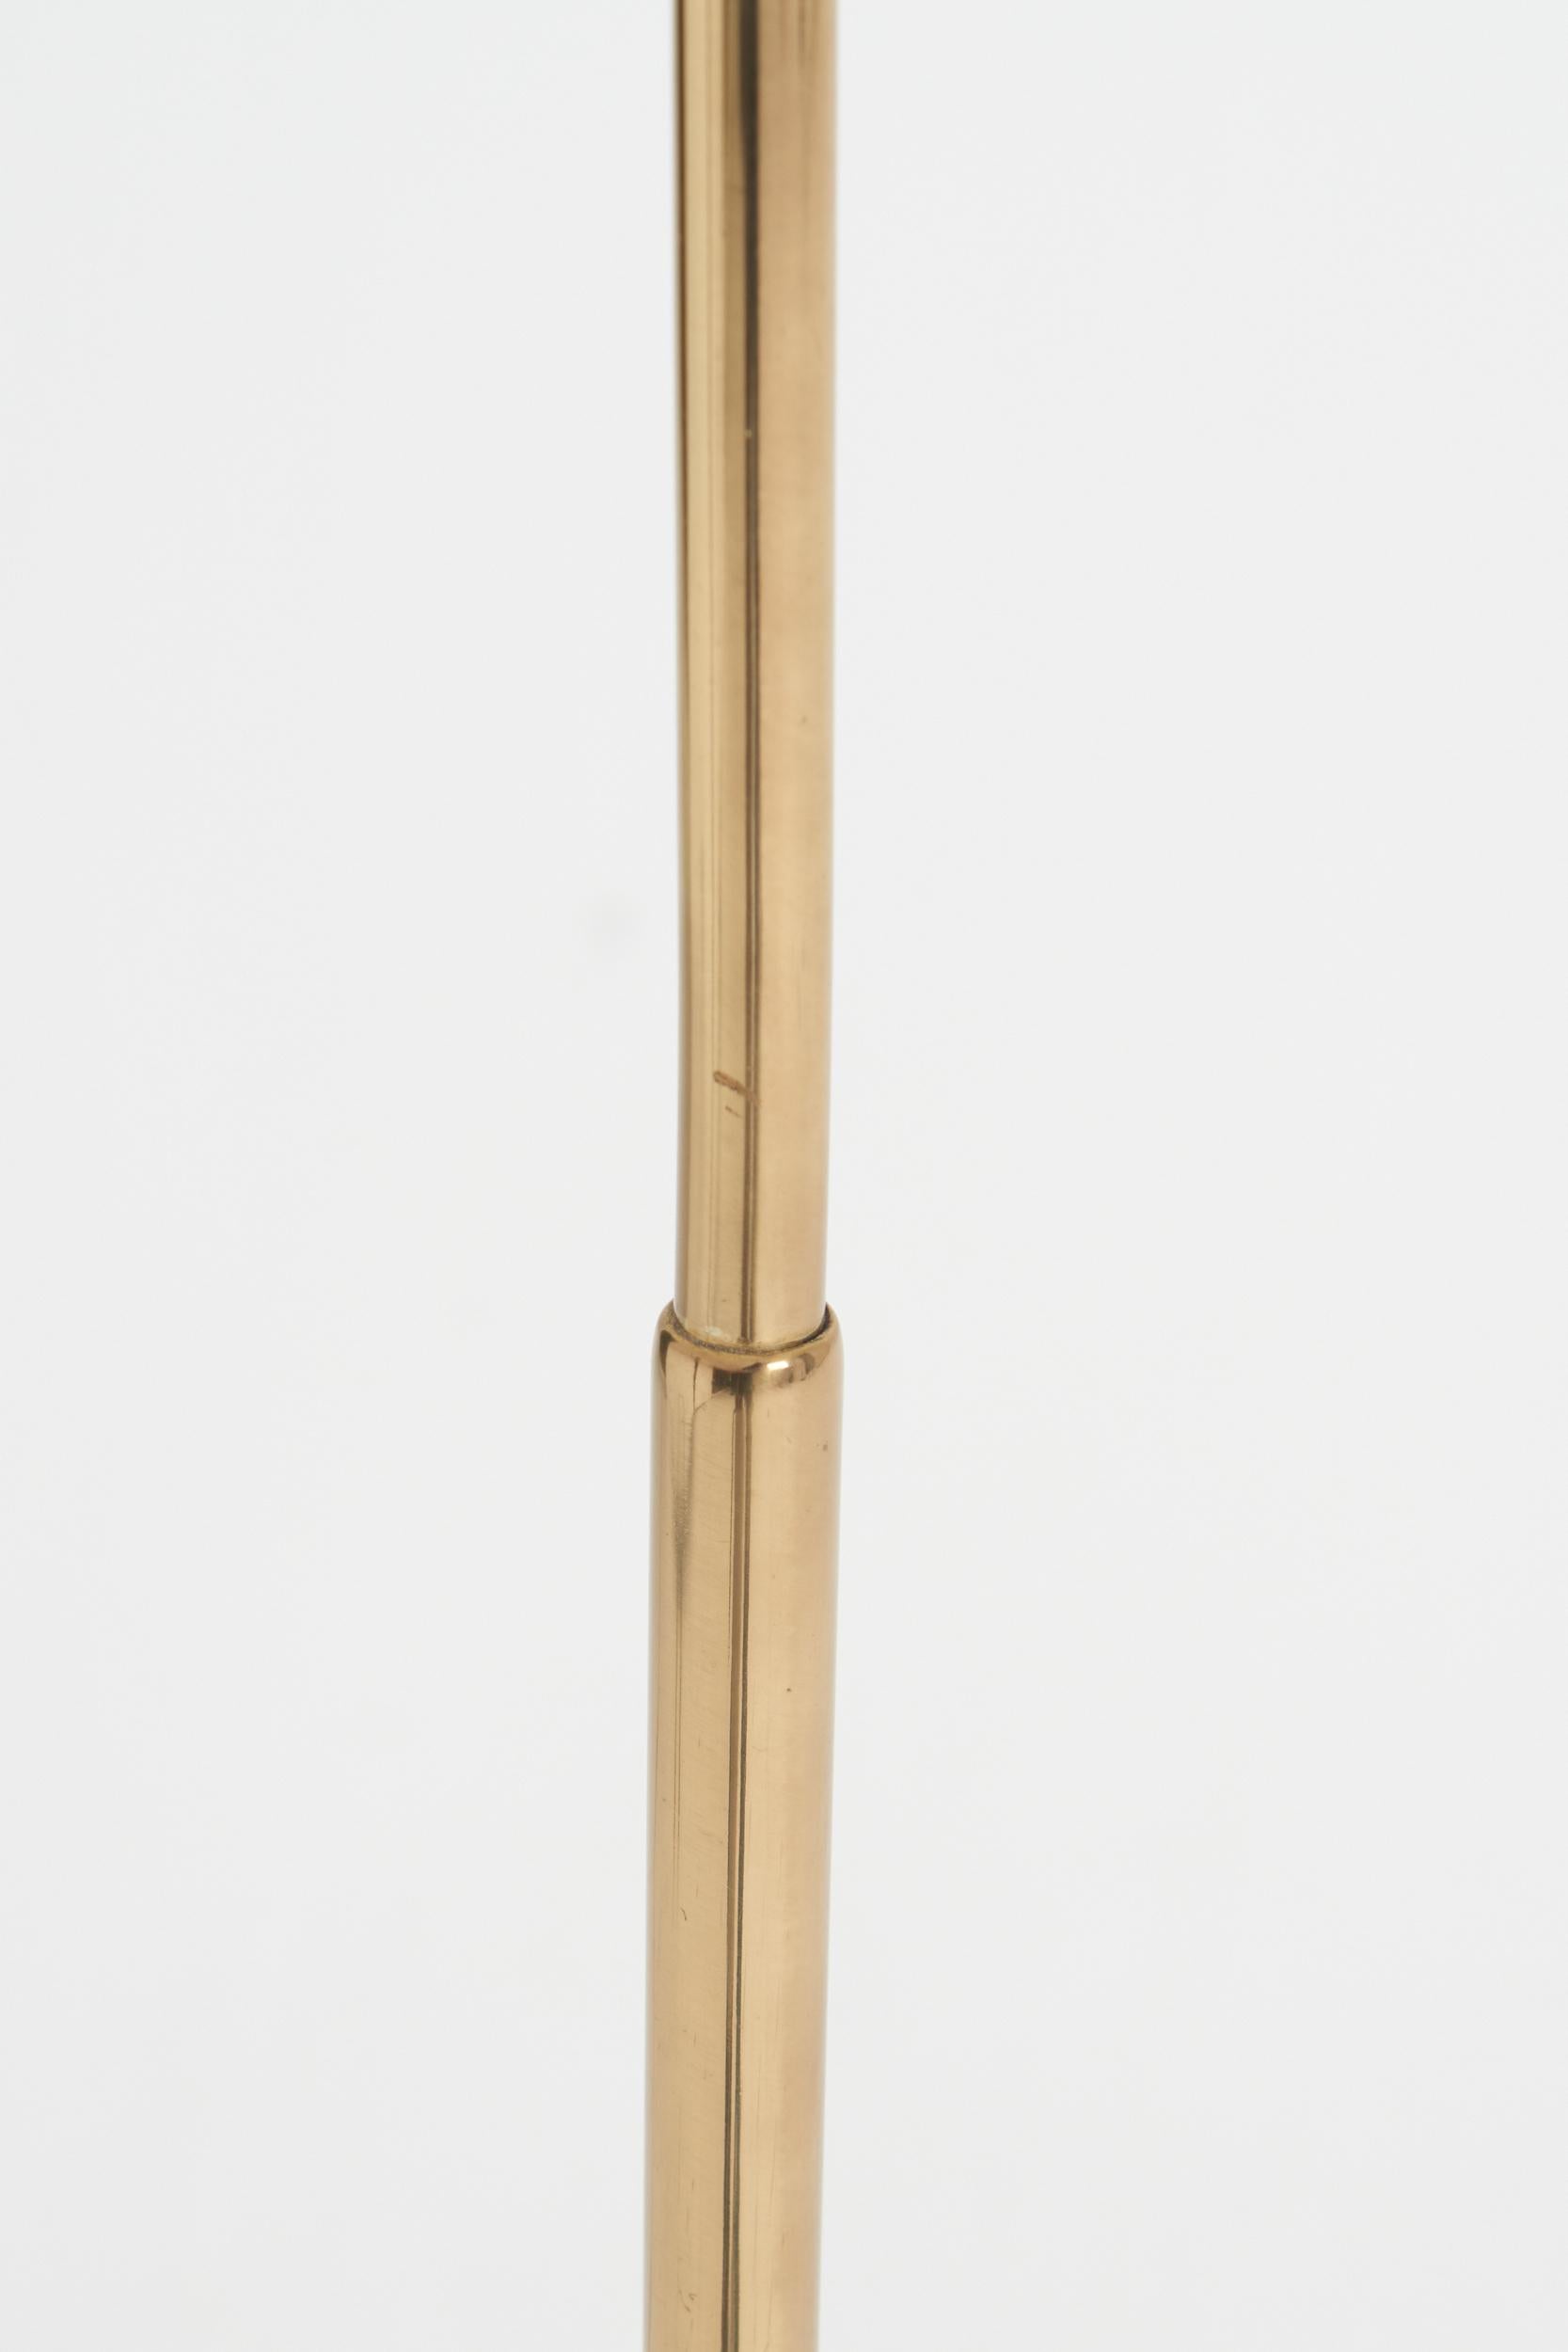 Swedish Mid-Century Brass Floor Lamp